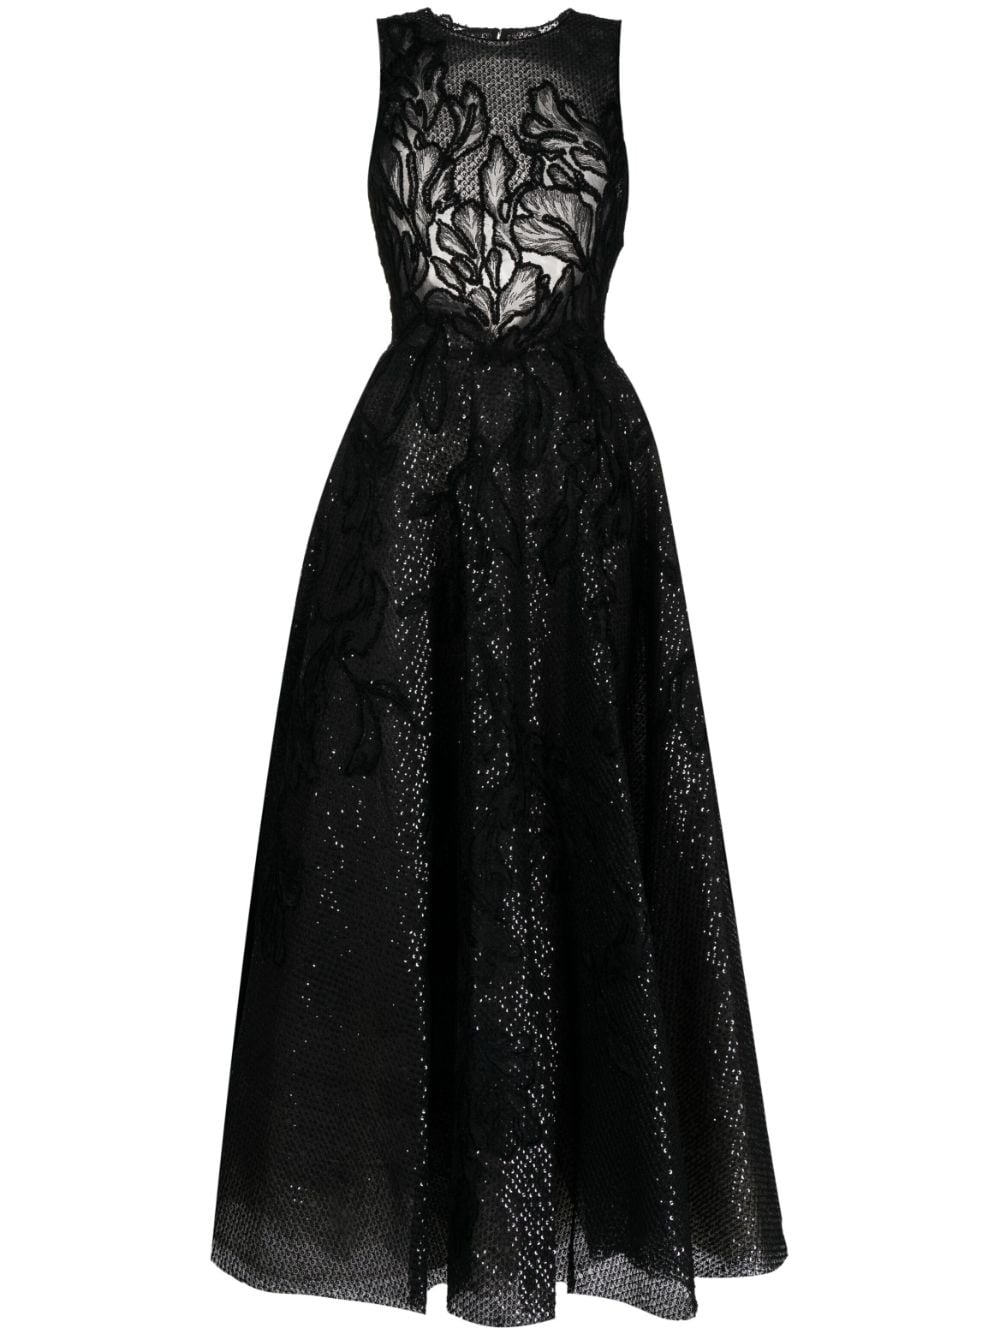 Saiid Kobeisy Transparentes Kleid In Black